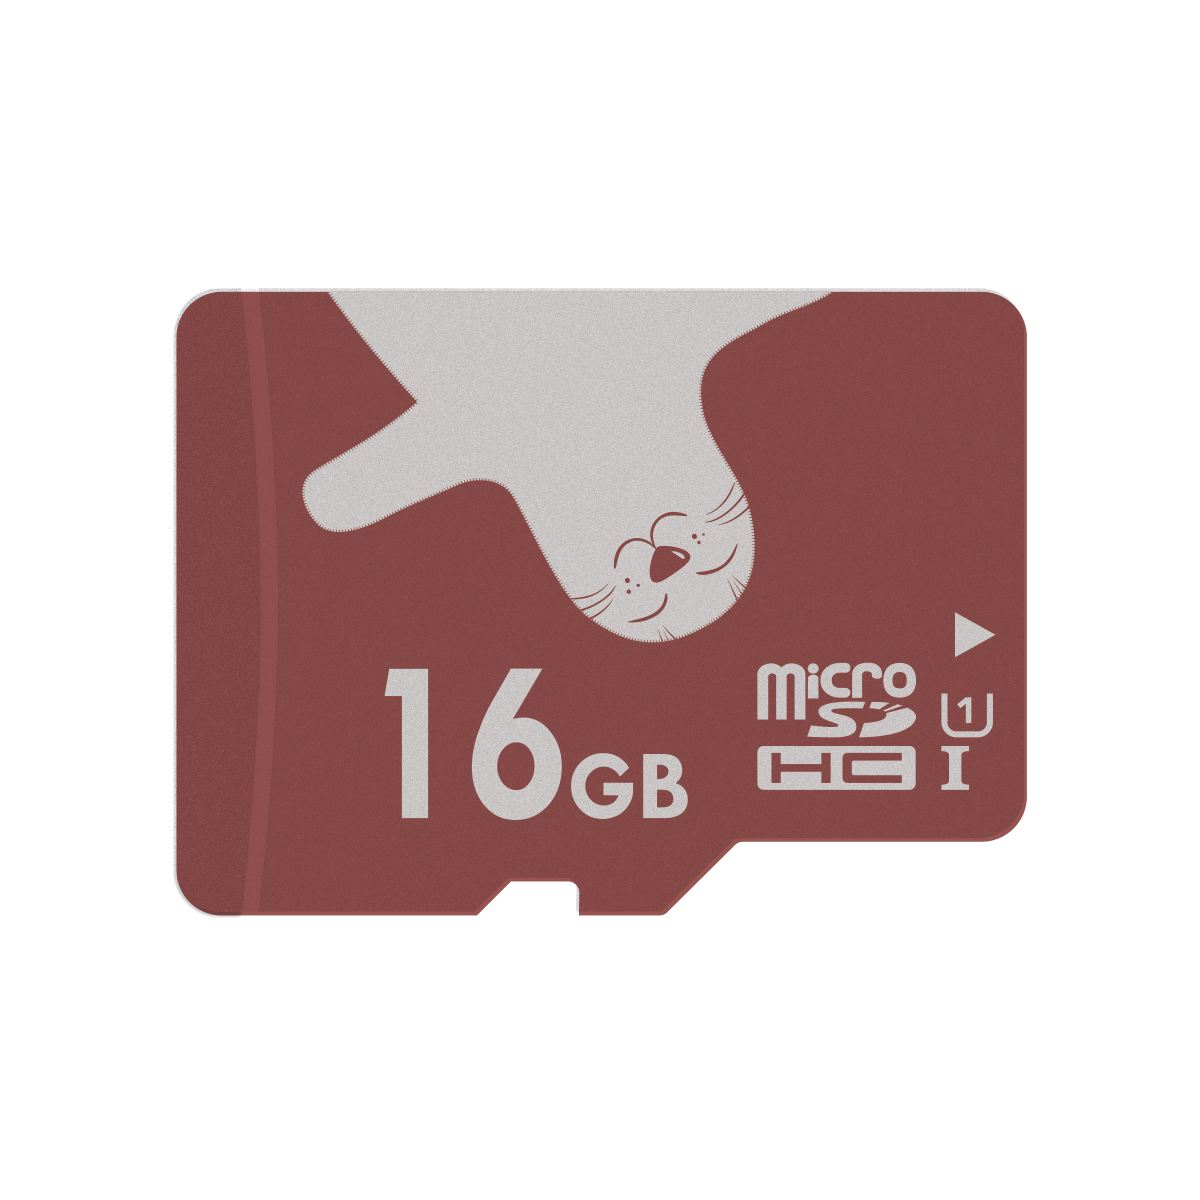 ALERTSEAL Micro SD Card 16GB Class 10 U1 microSD Memory Card for Smartphone